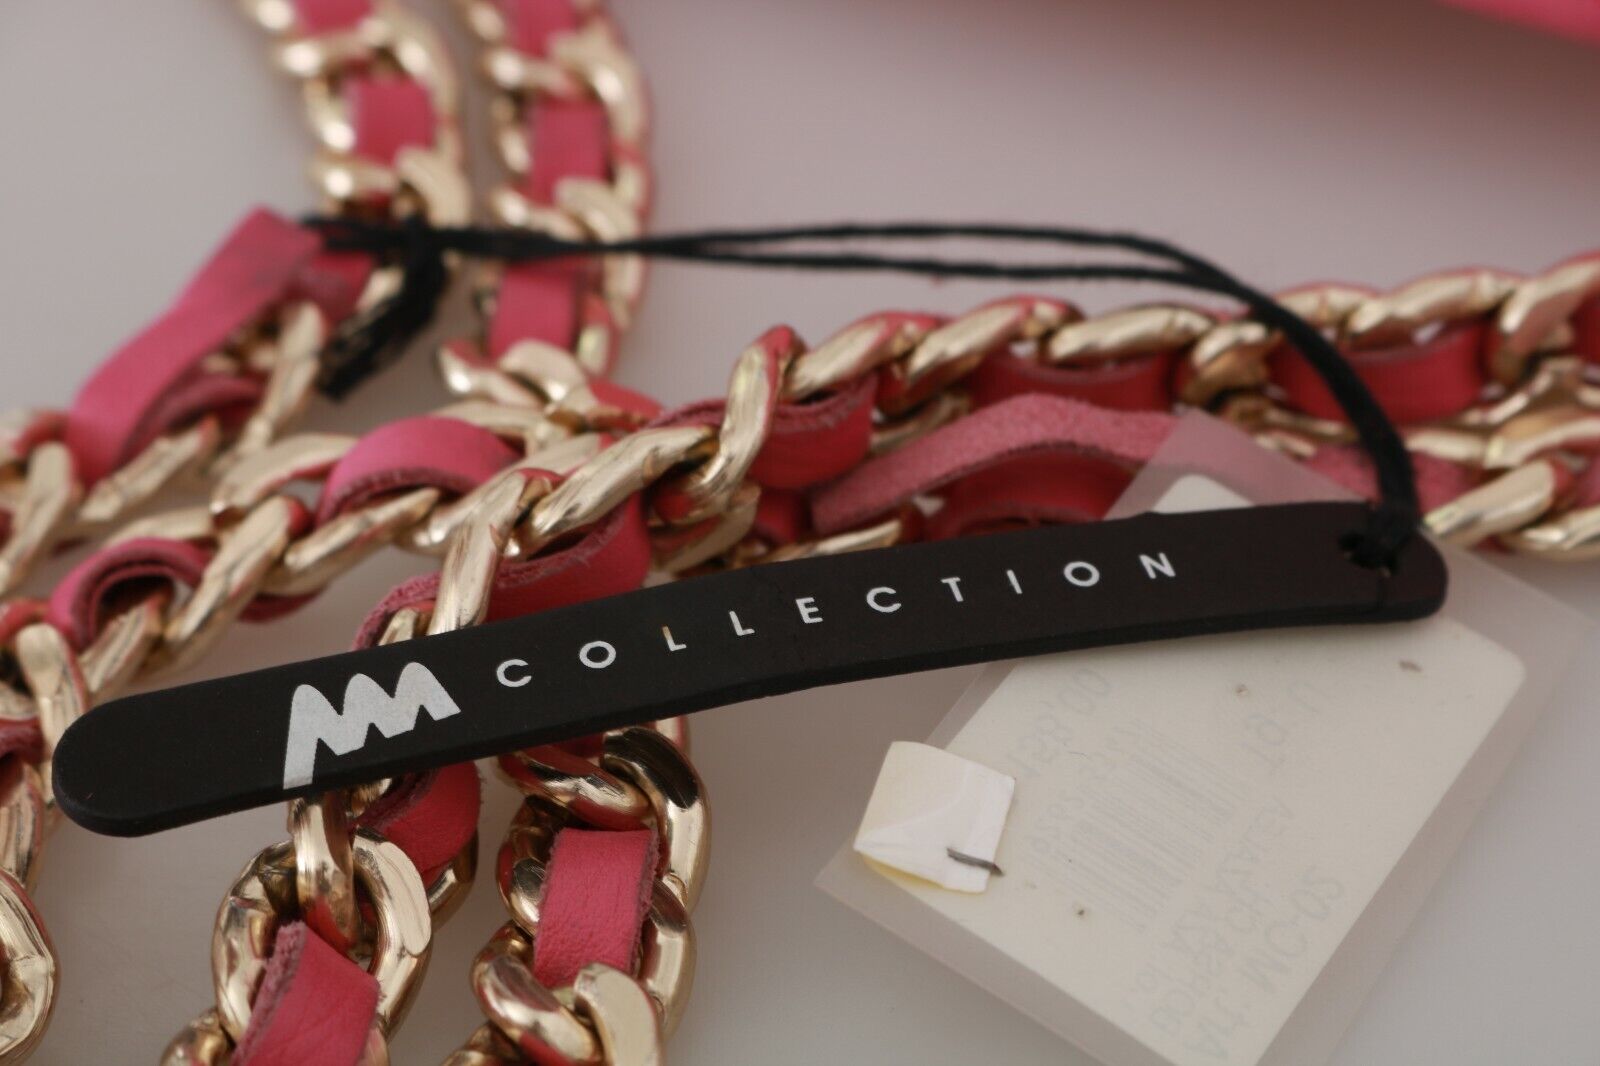 MM COLLECTION Bag Leather Pink Handbag Purse Chain Strap Women Borse RRP  $400